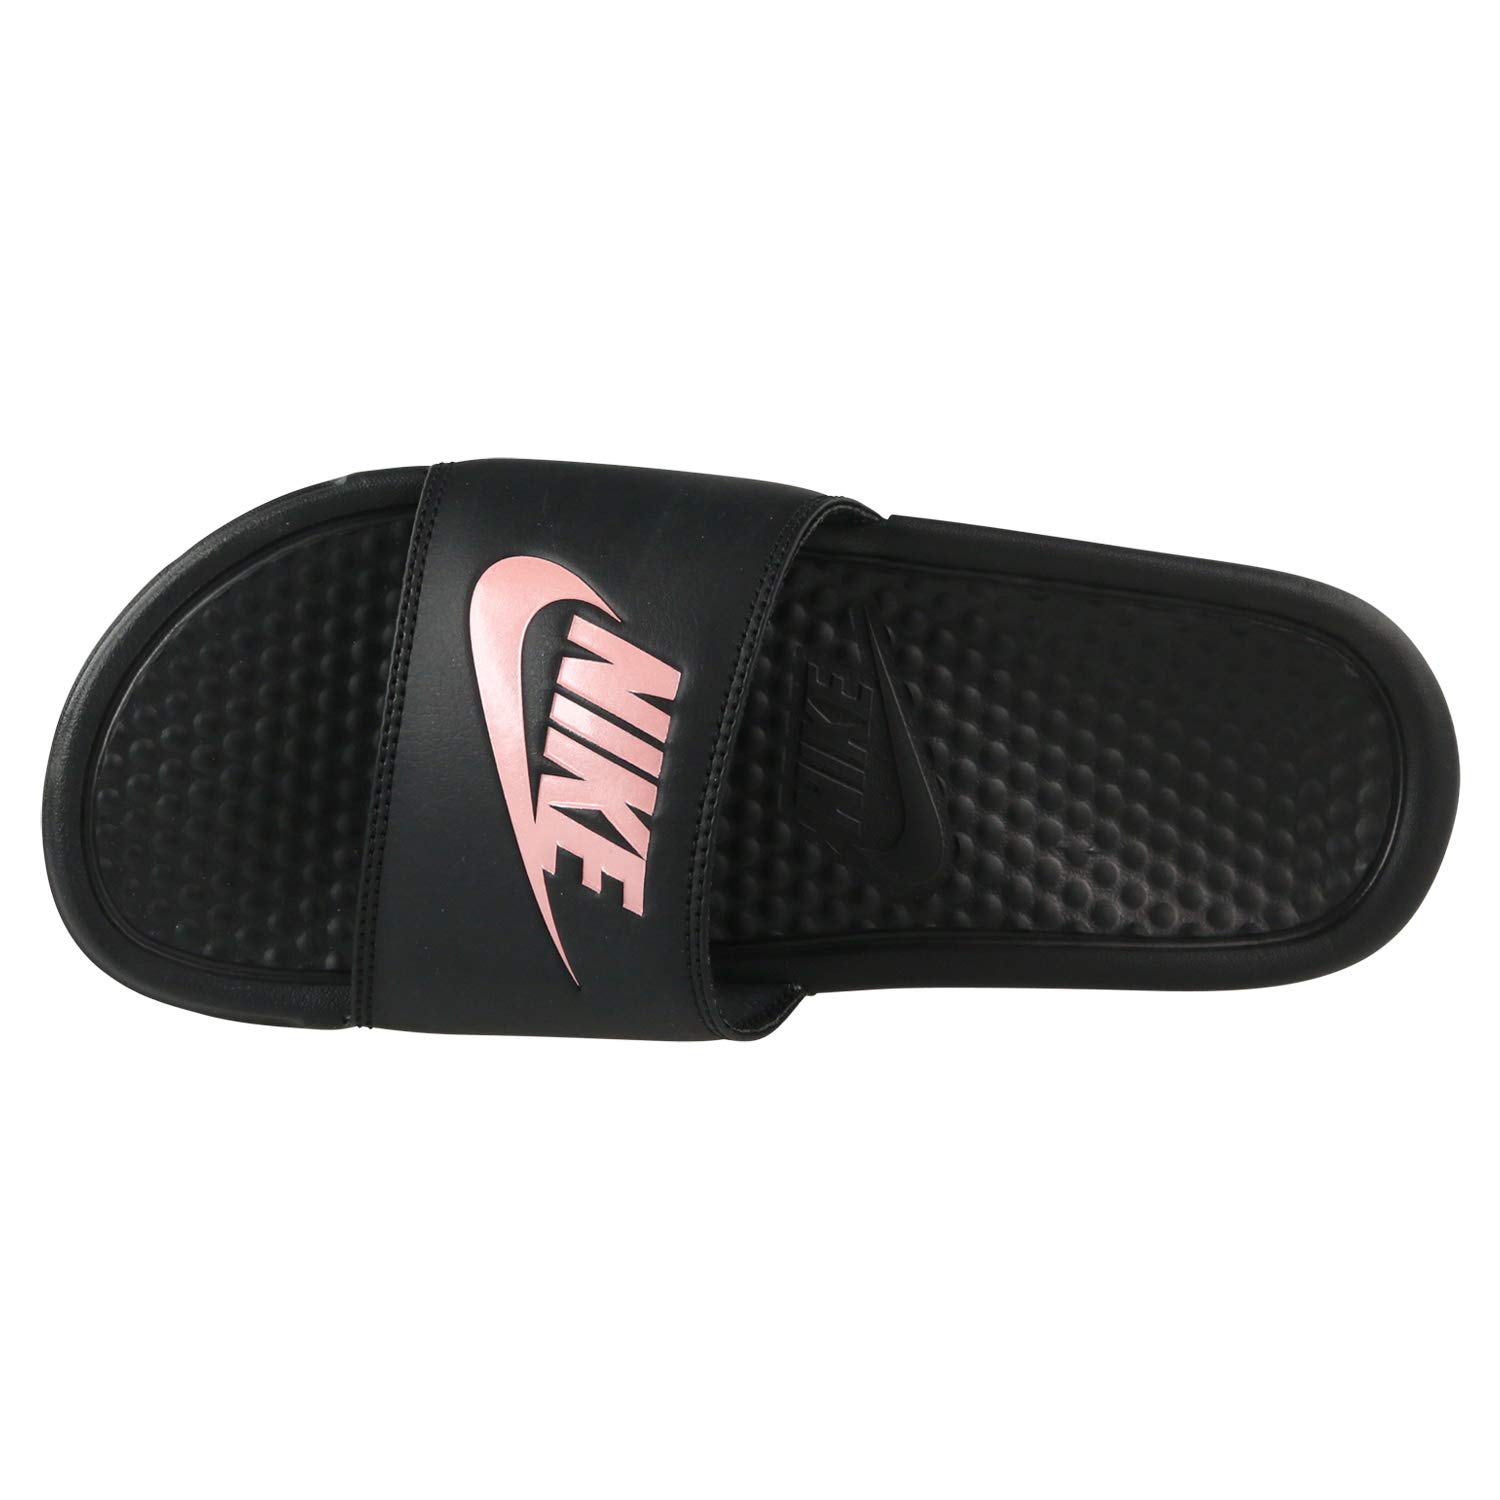 Nike Women's Benassi Just Do It Sandal